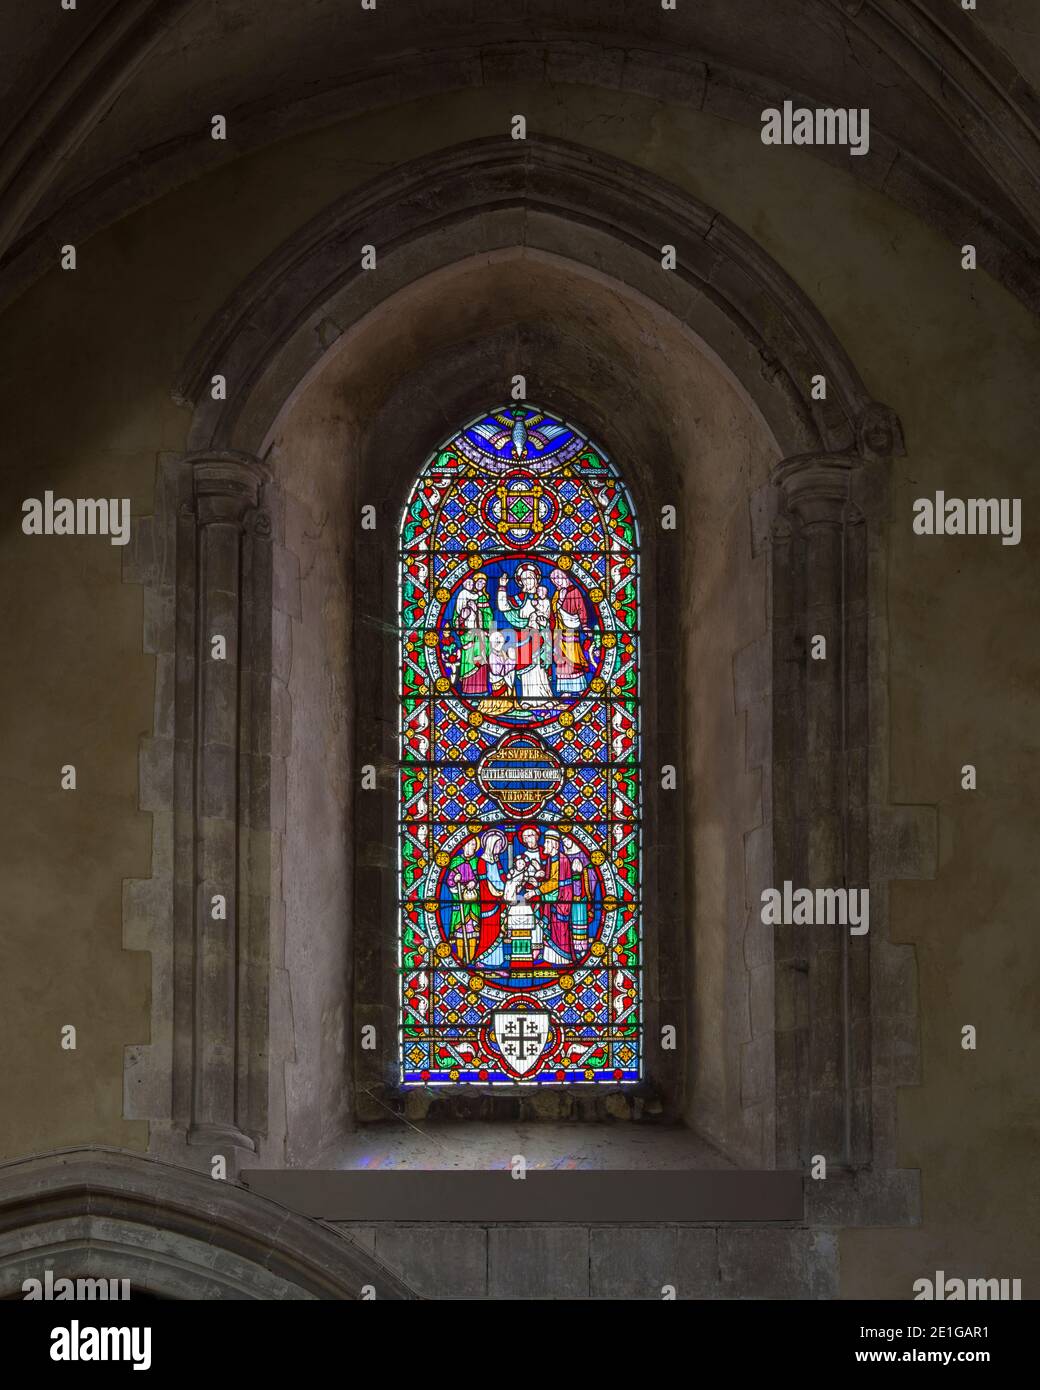 Glasmalerei in der Kapelle, Hospital of St Cross und Almshouse of Noble Poverty, Winchester, Großbritannien. Stockfoto